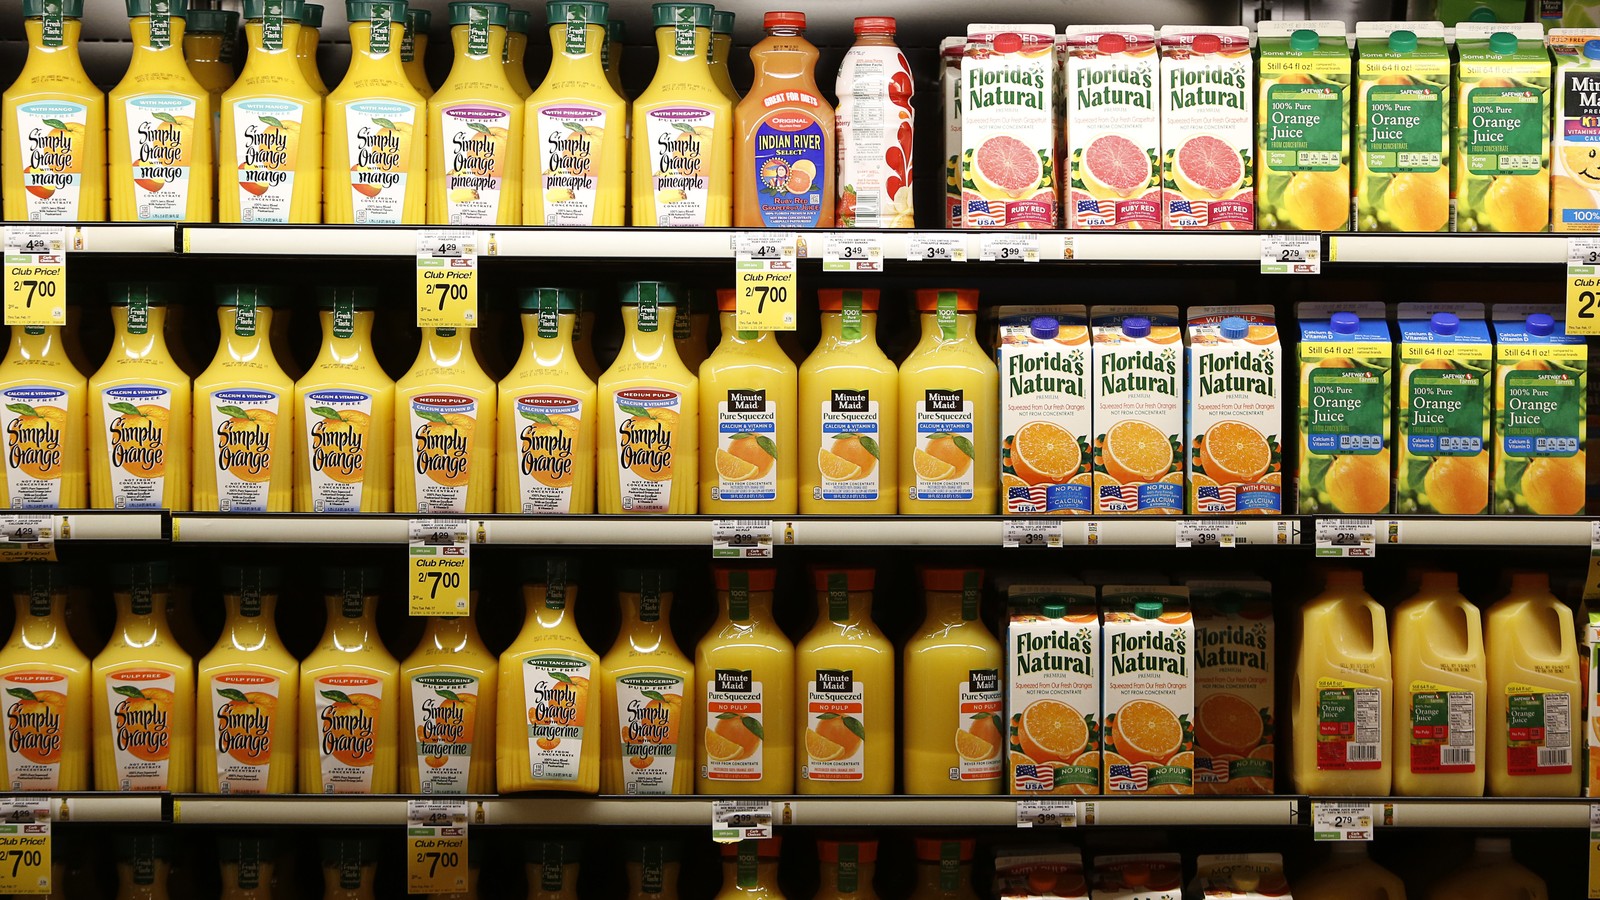 Are fresh juice drinks as healthy as they seem? - Harvard Health